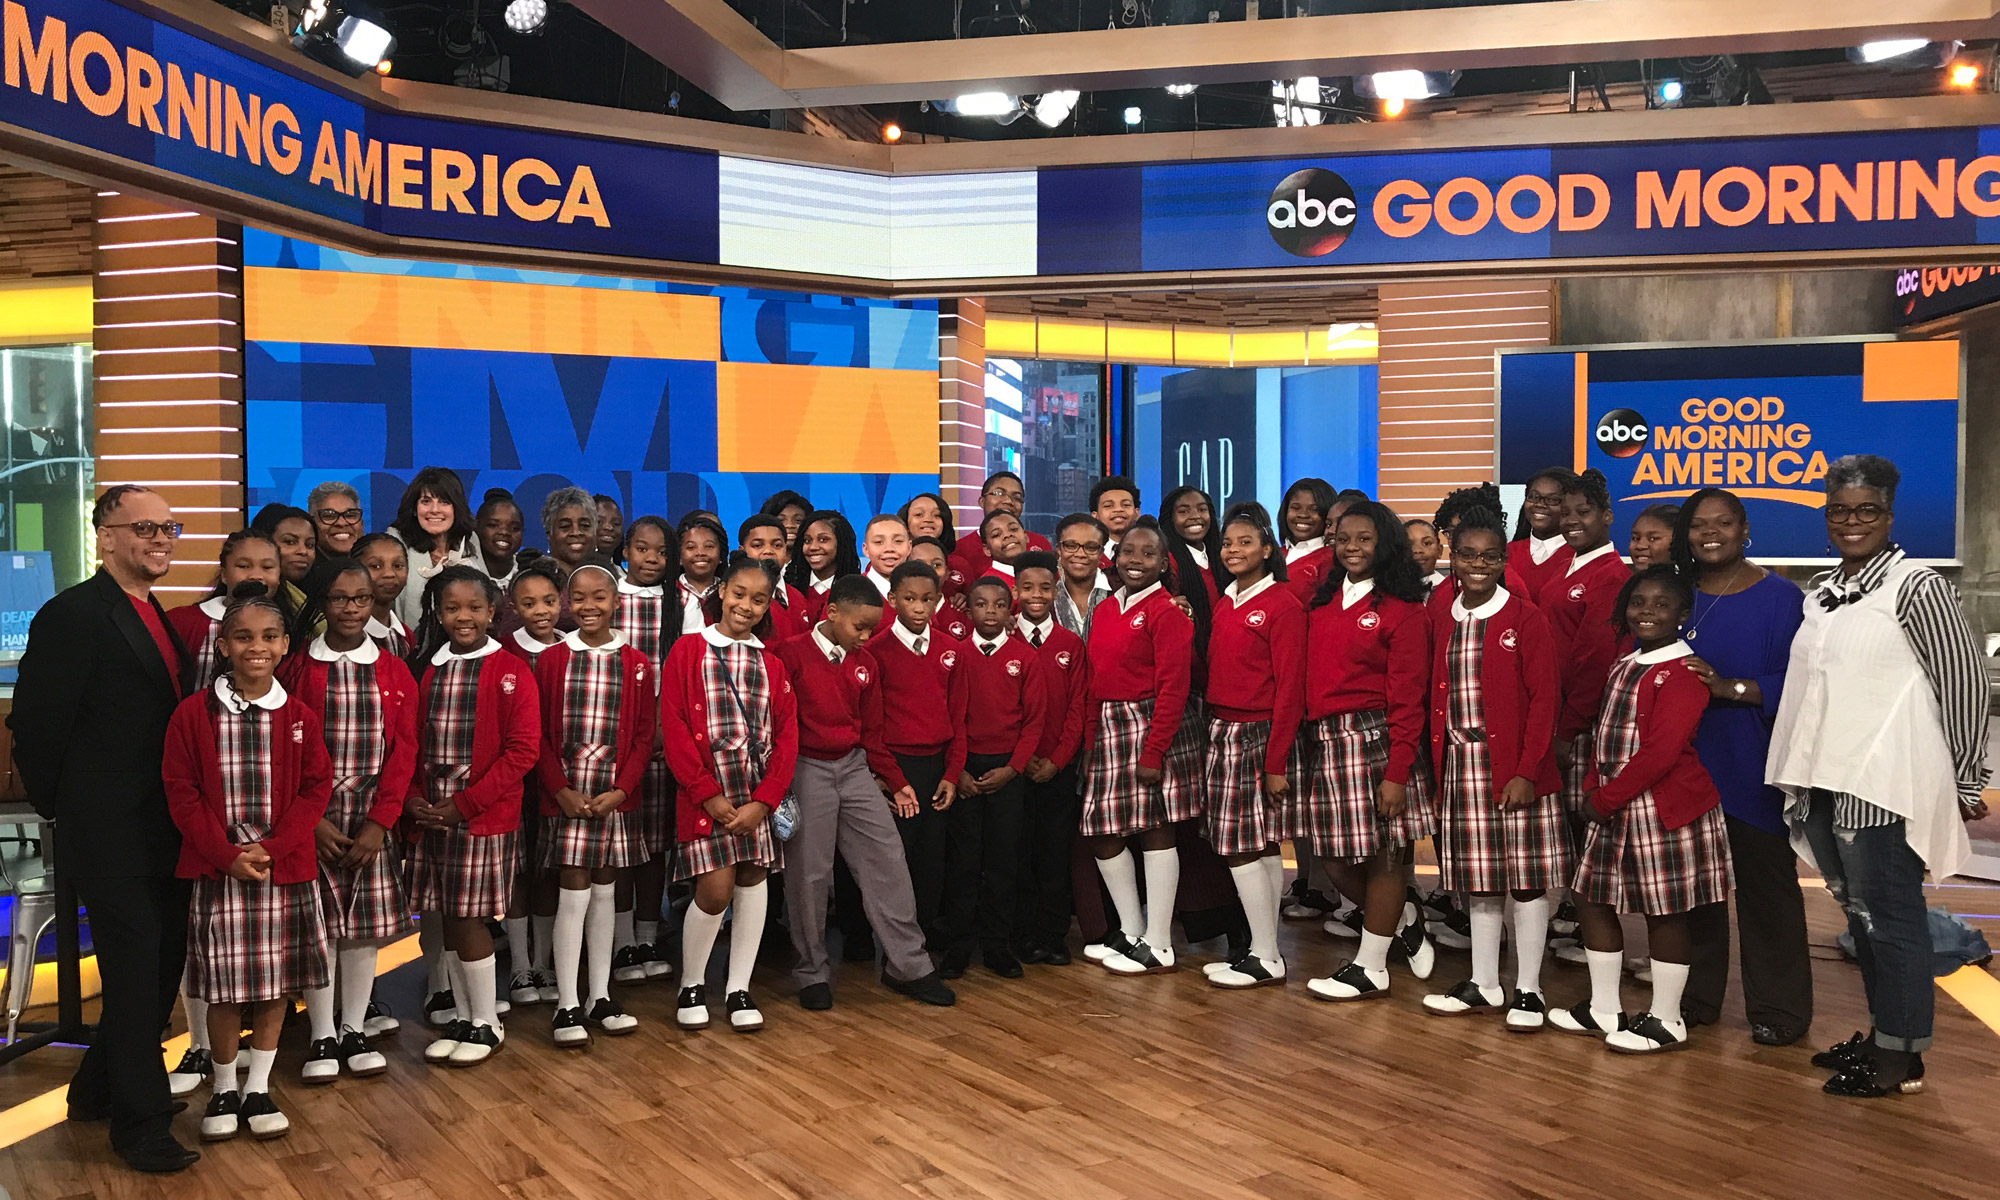 Cardinal-Shehan-School-Choir-Good-Morning-America-Carousel